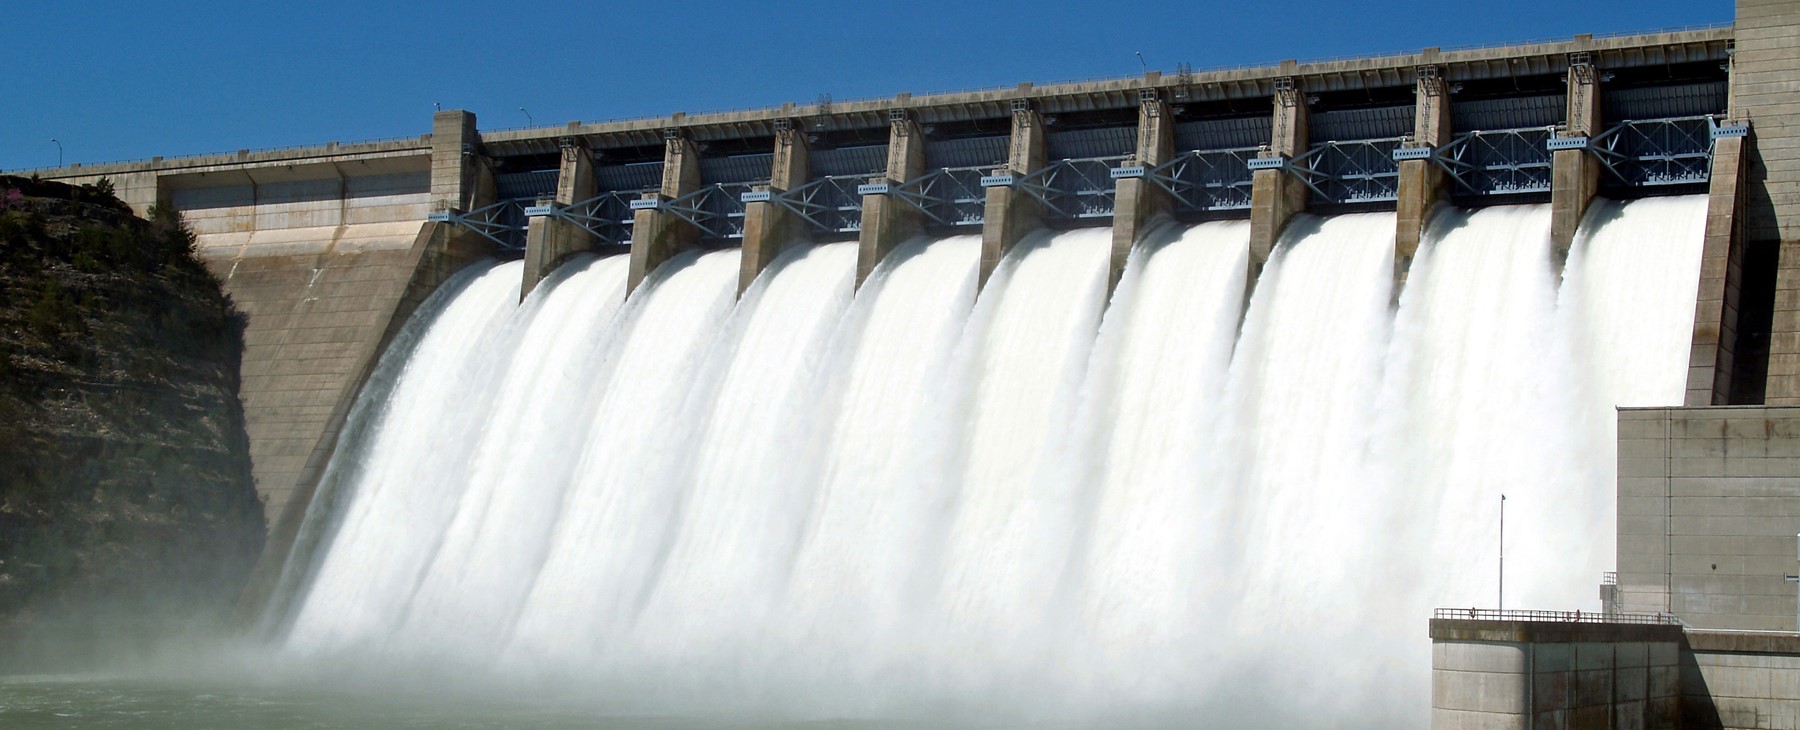 Hydro power dams